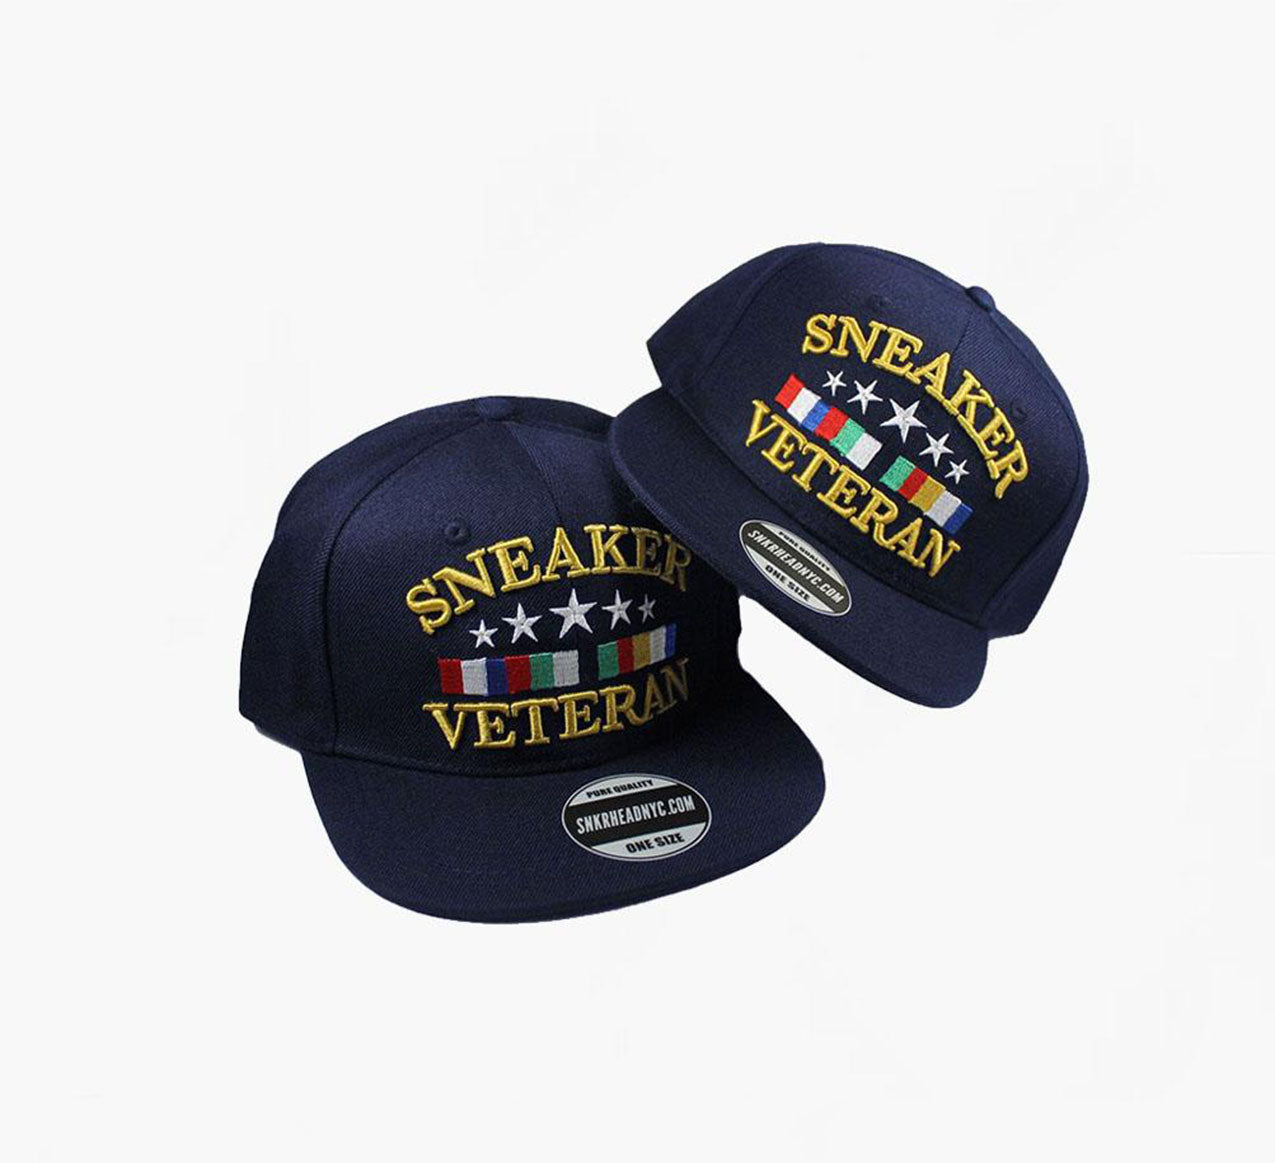 Sneaker Veteran Navy Blue Snapback Hat